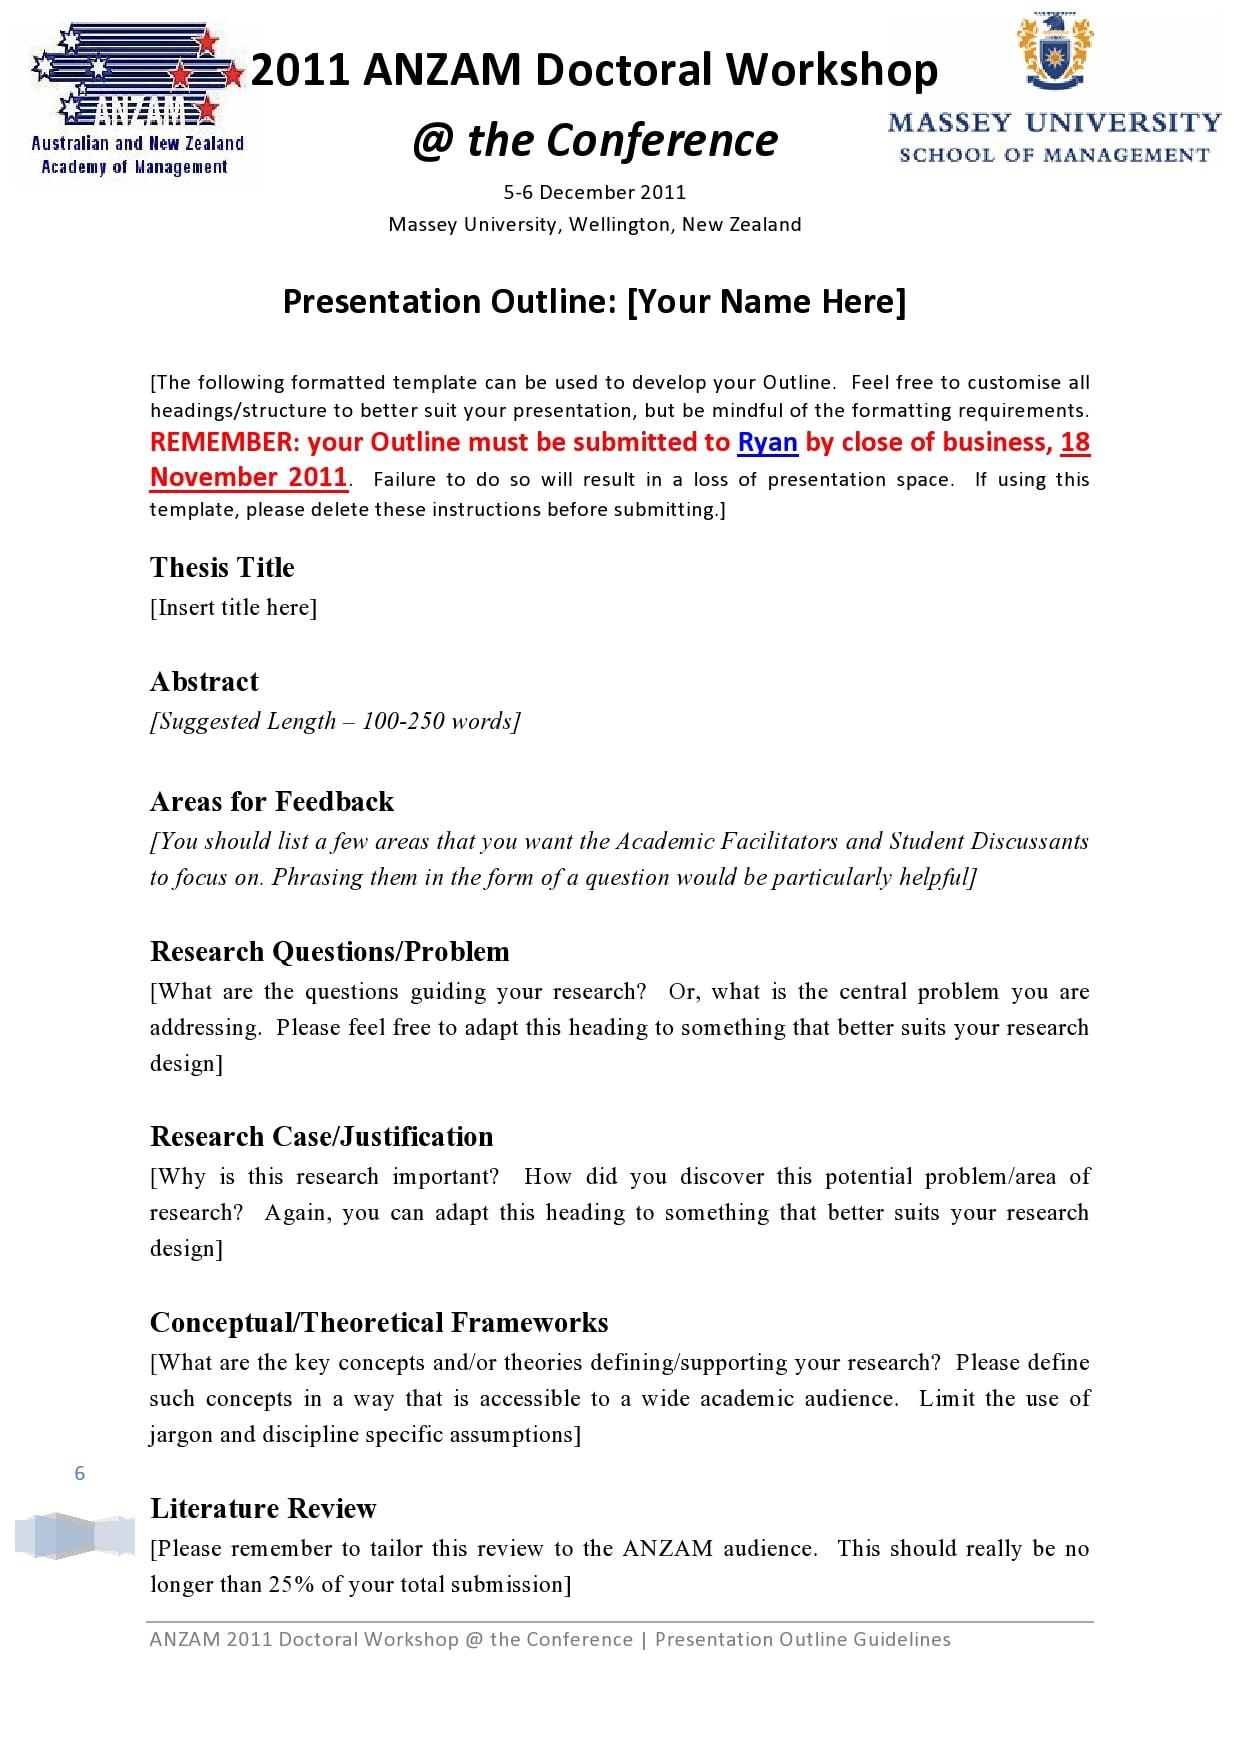 sample powerpoint presentation outline